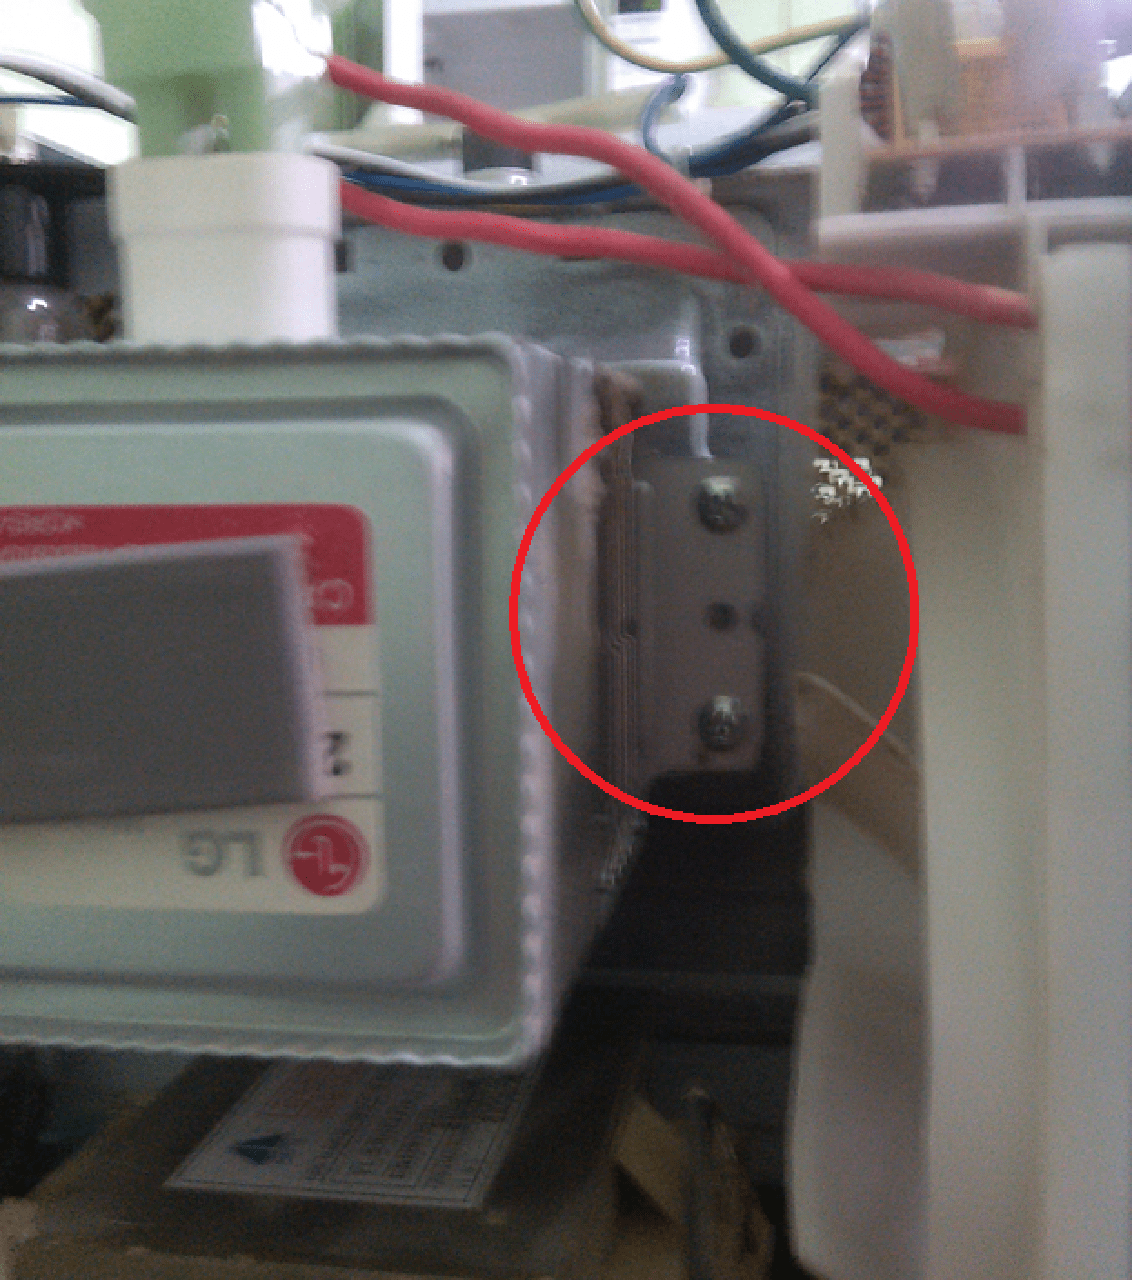 Включения свч. Daewoo микроволновка колпачок магнетрона. Микроволновка LG 2m213 искрит. Микроволновая печь искрит внутри. Искрит микроволновка внутри cp1395str.